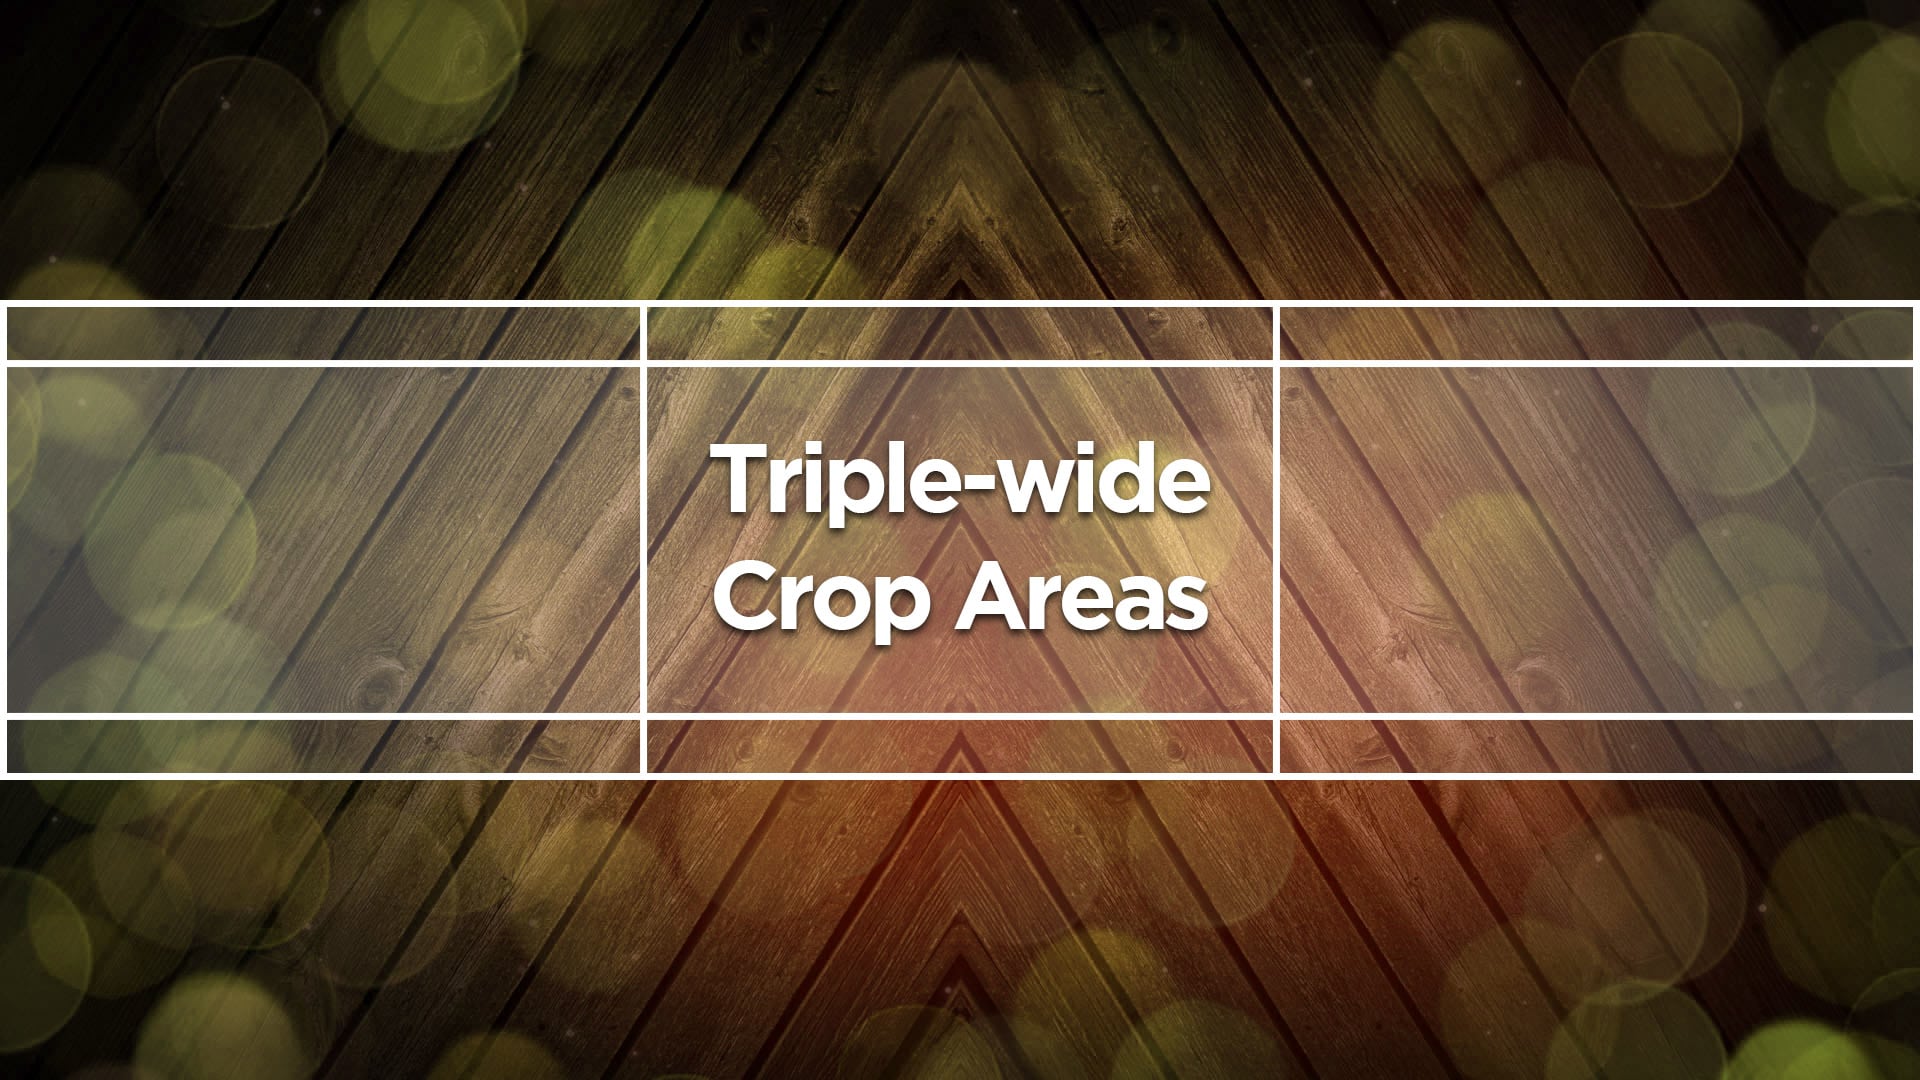 Triple-wide Crop Areas